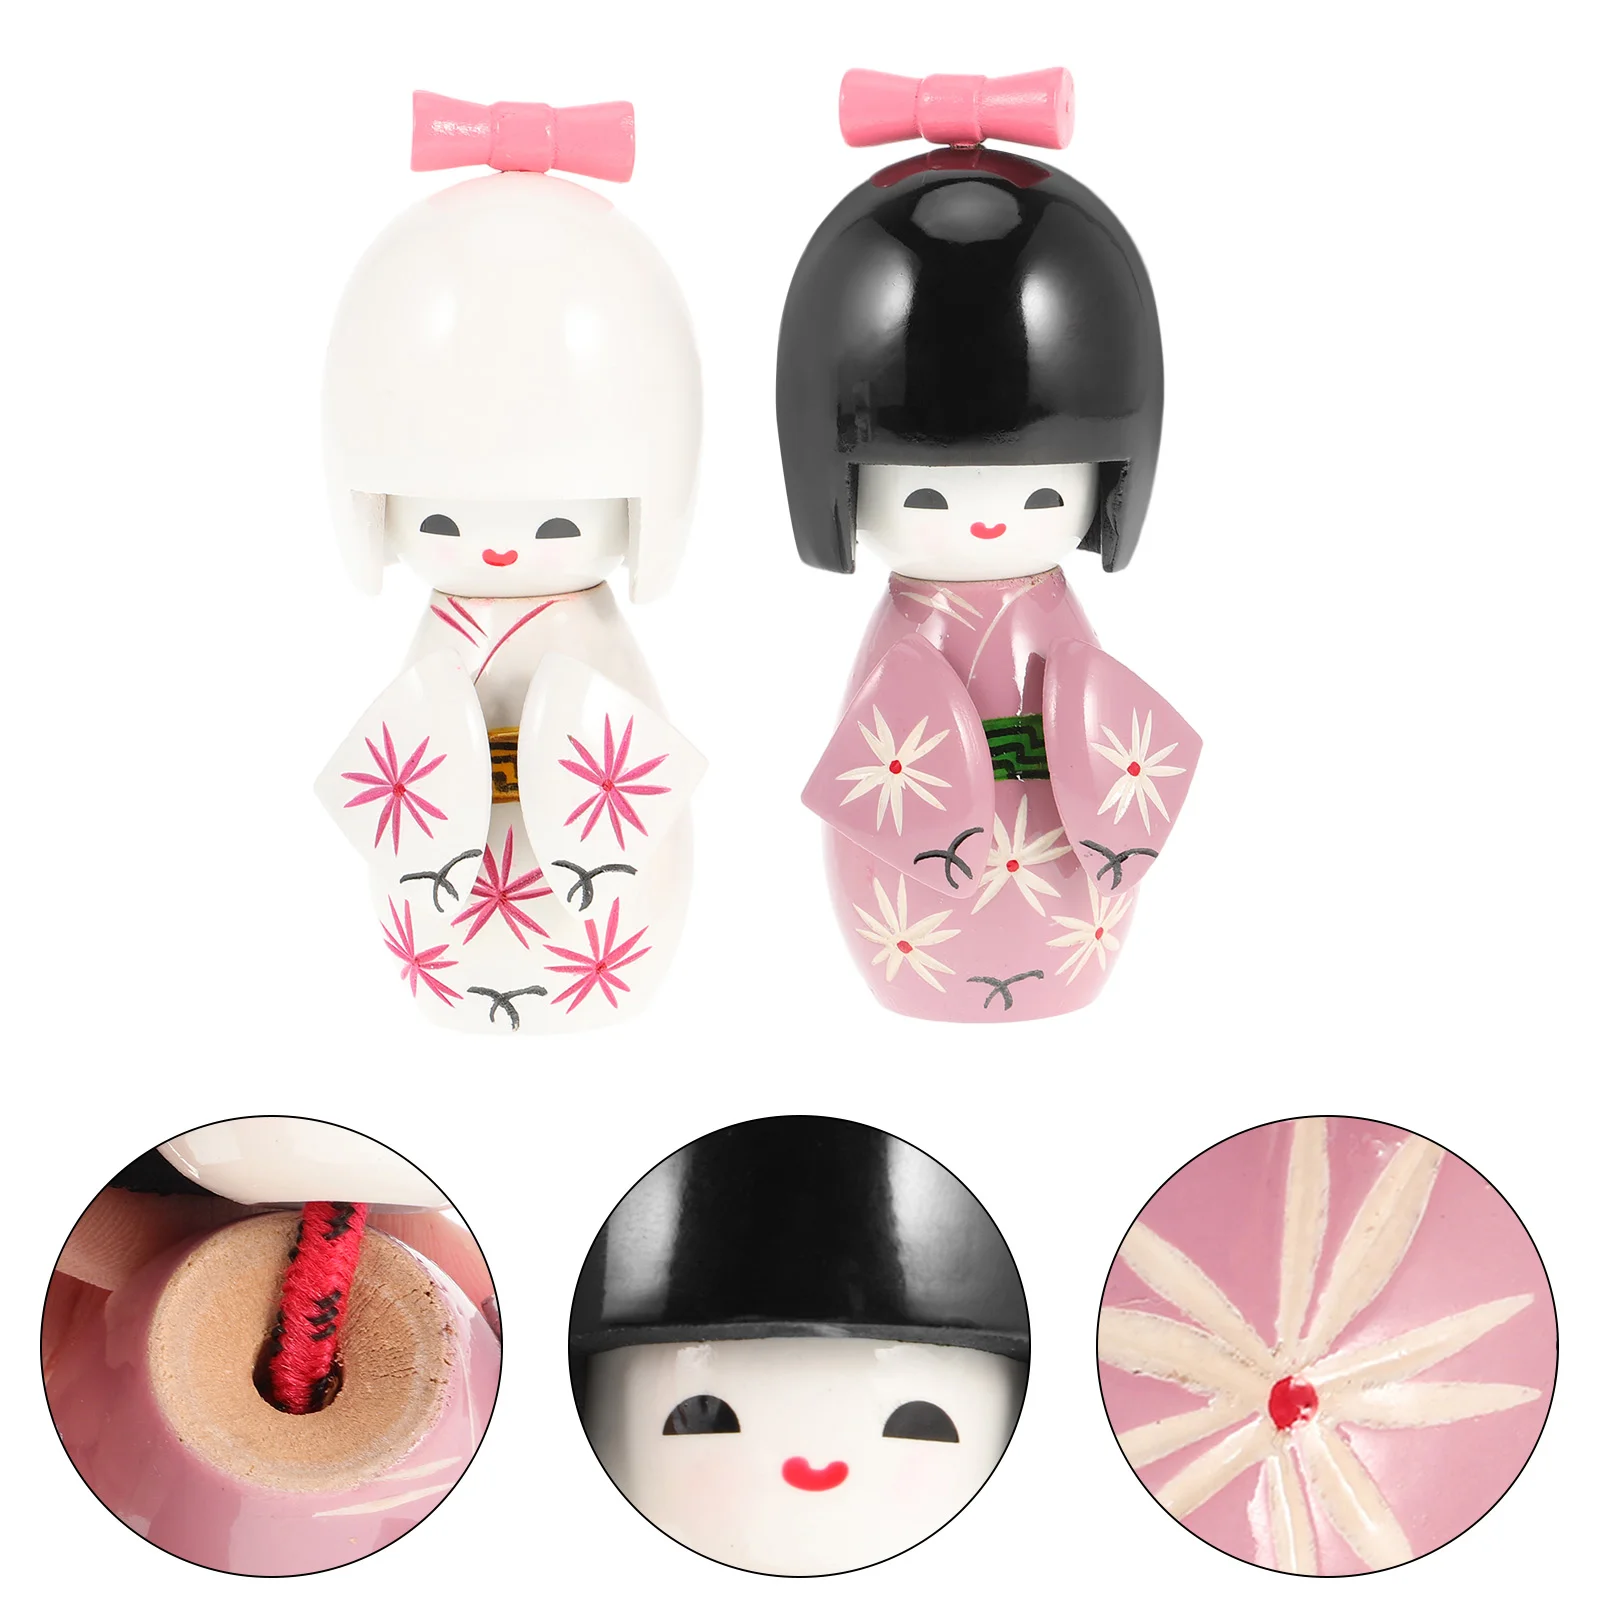 

2 Pcs Kimono Japanese Style Desktop Adornment Gifts Home Crafts Shop Decor Tabletop Ornament Decorations Kimonos